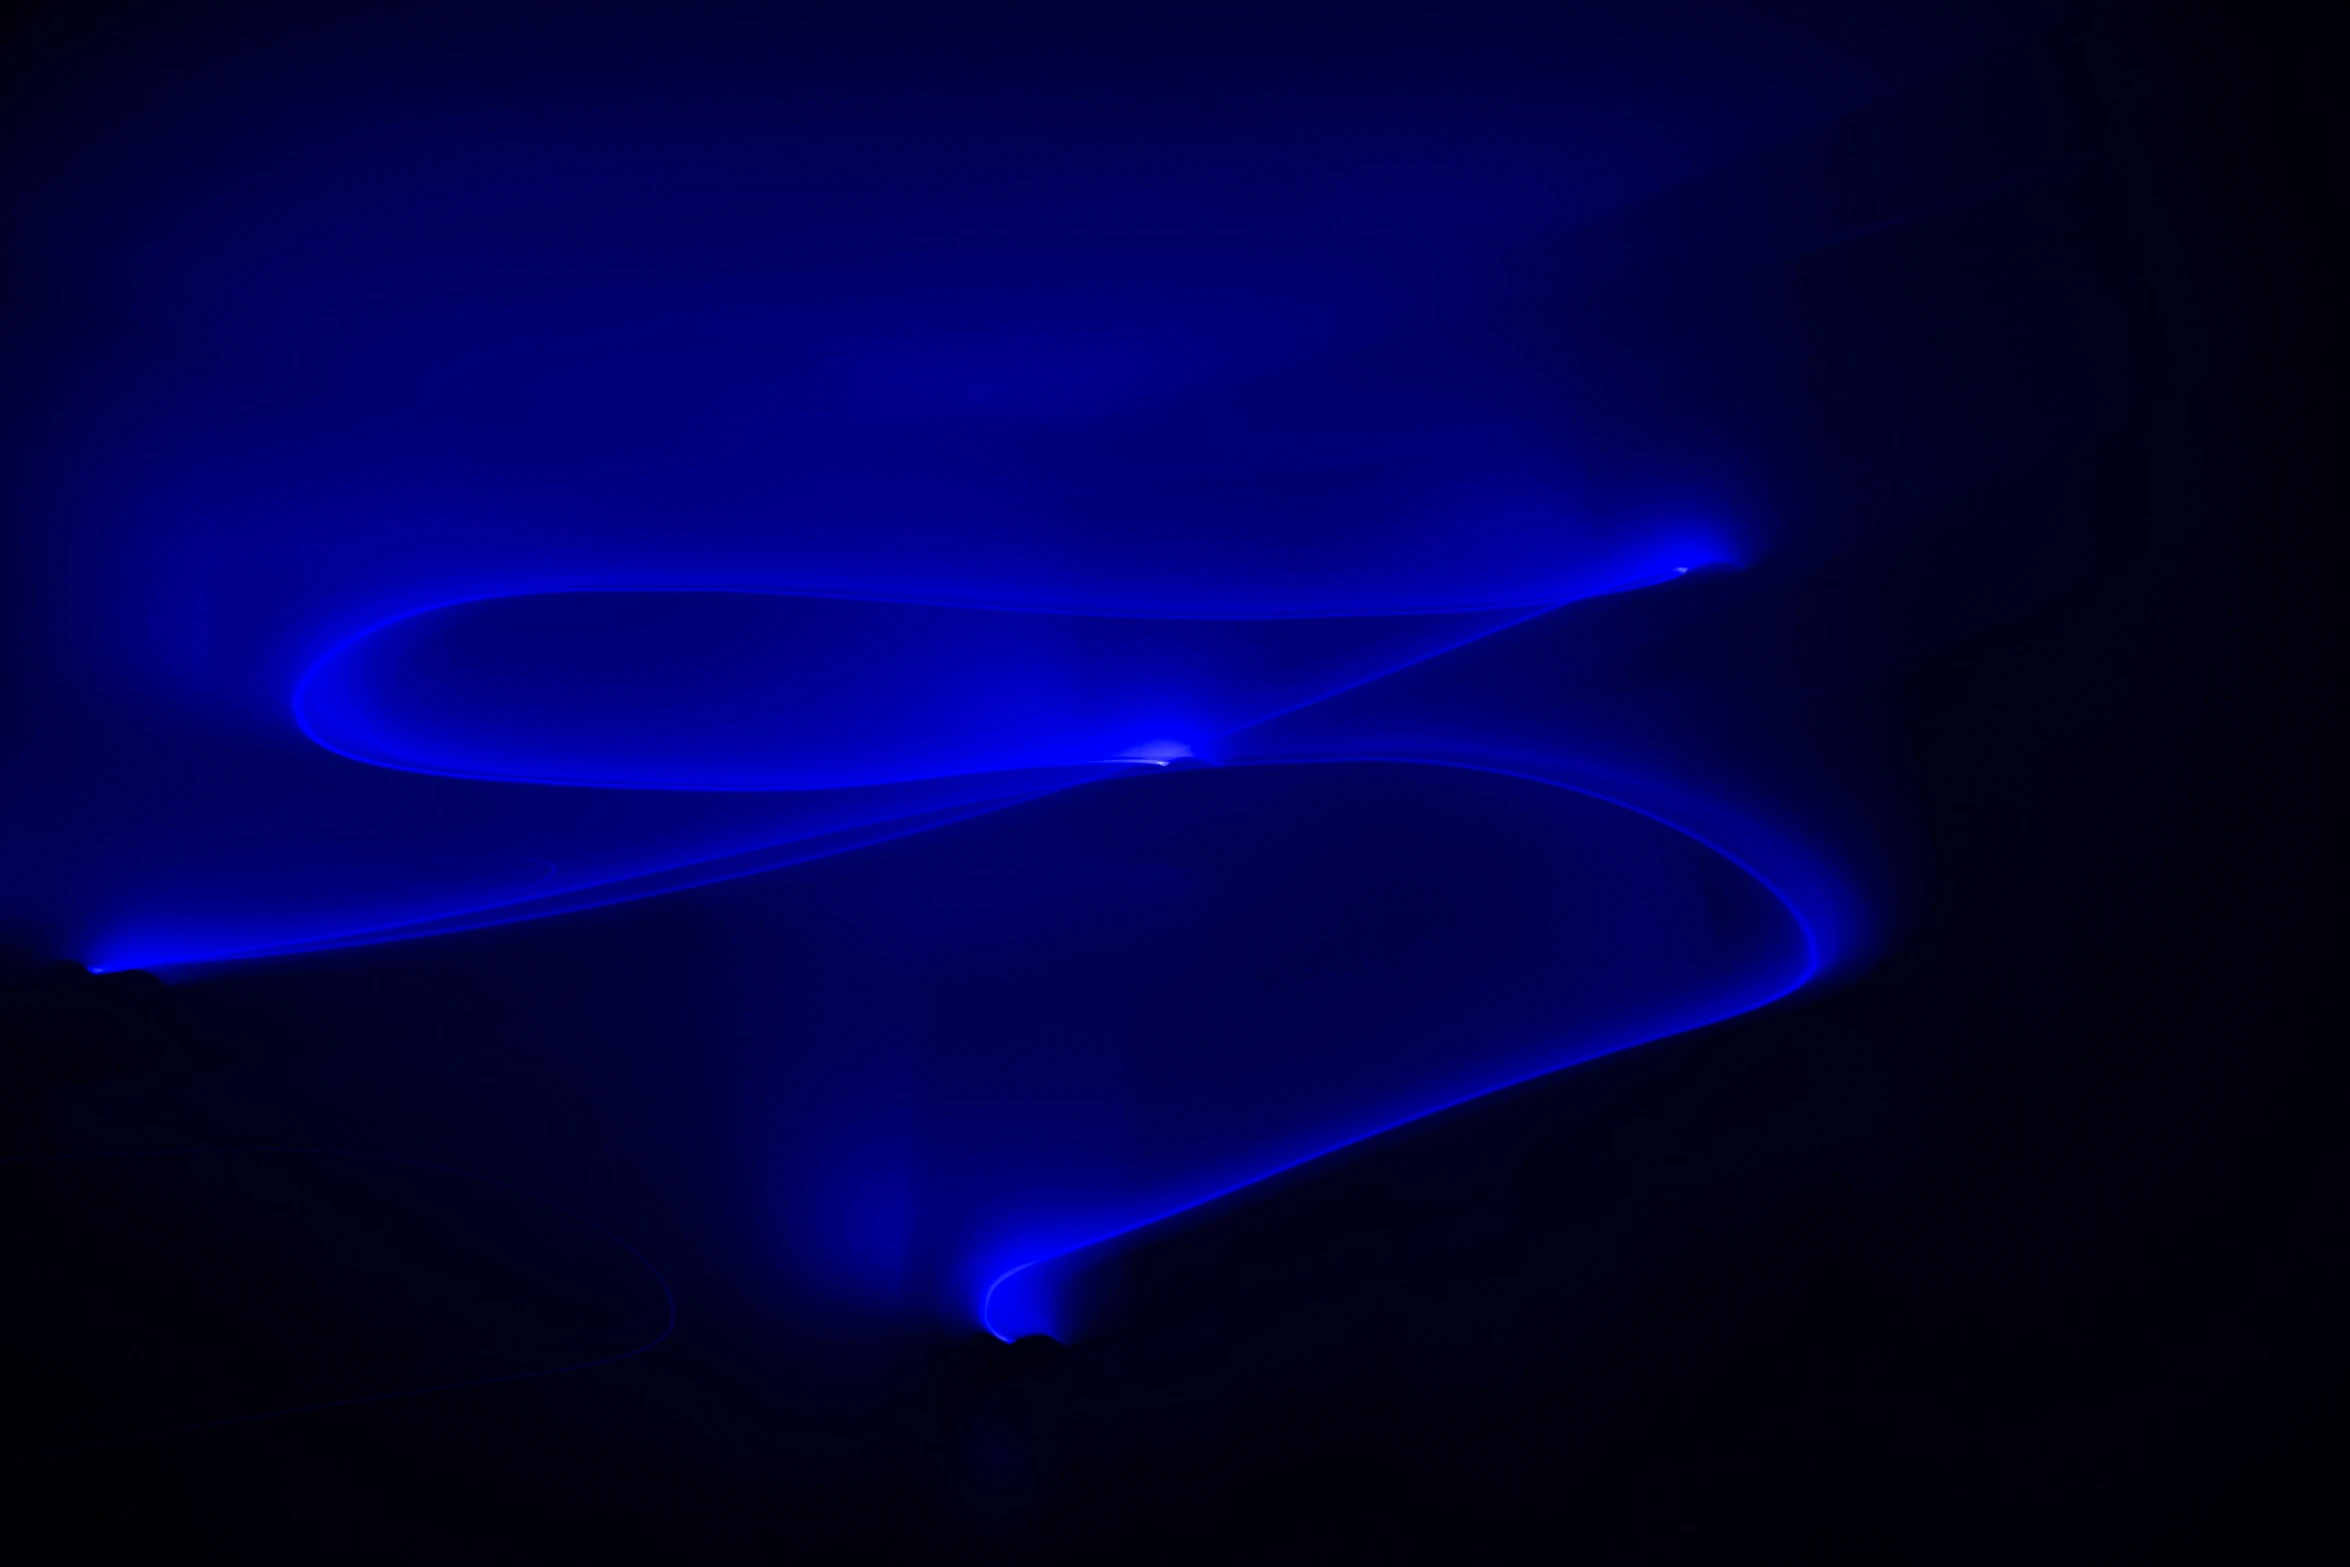 blue liquid swirls are arranged on black surface